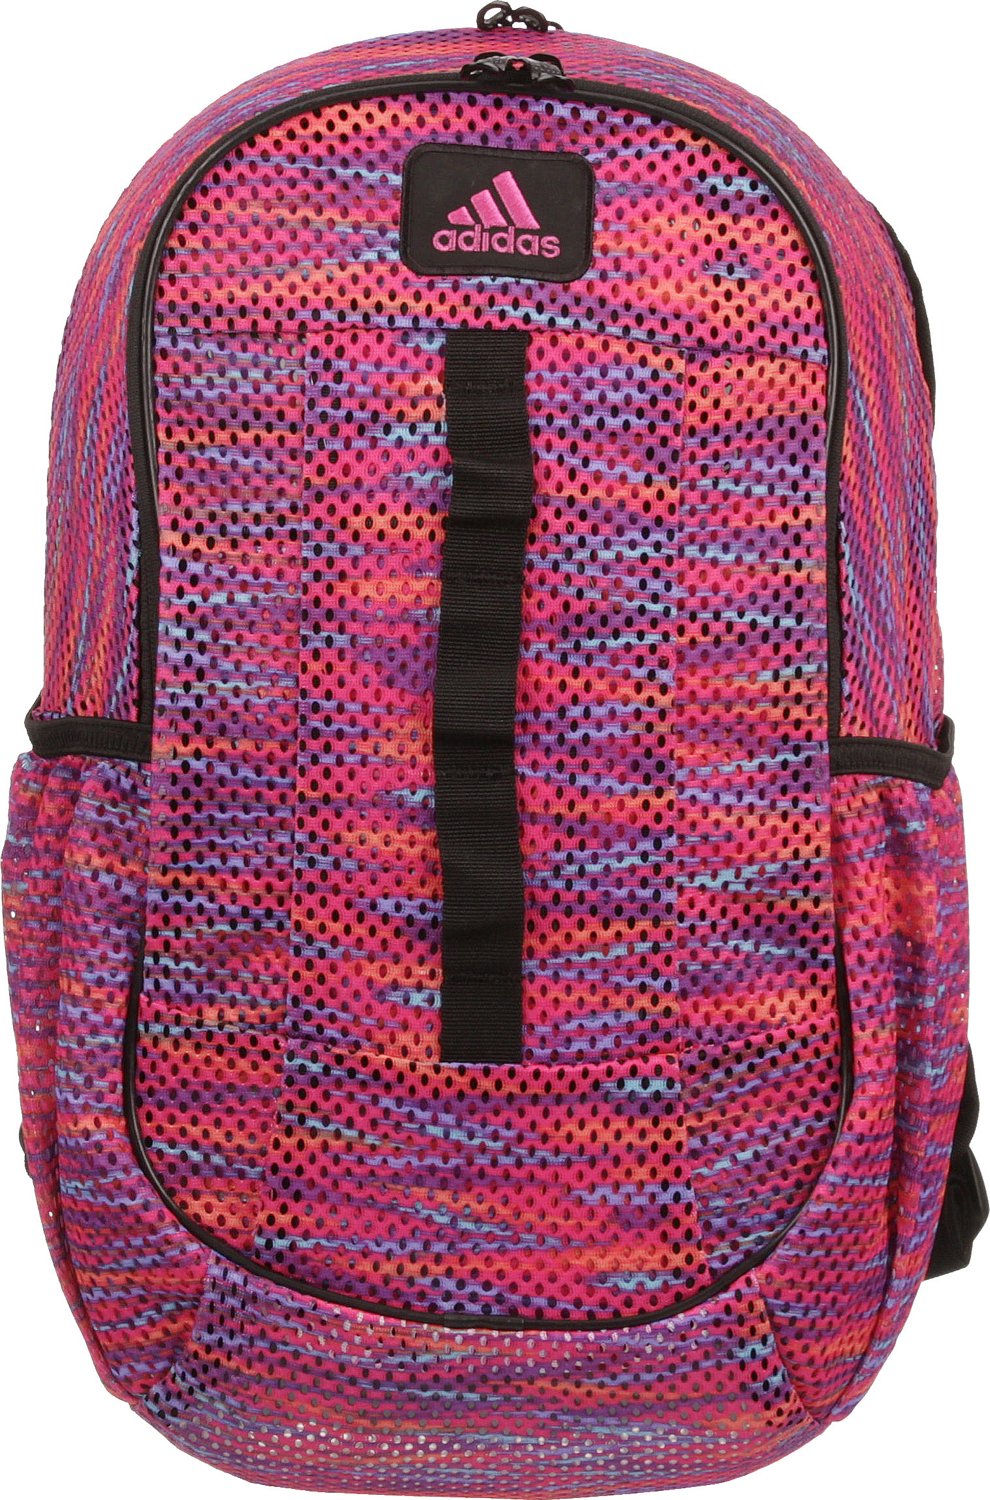 adidas mesh backpacks for school